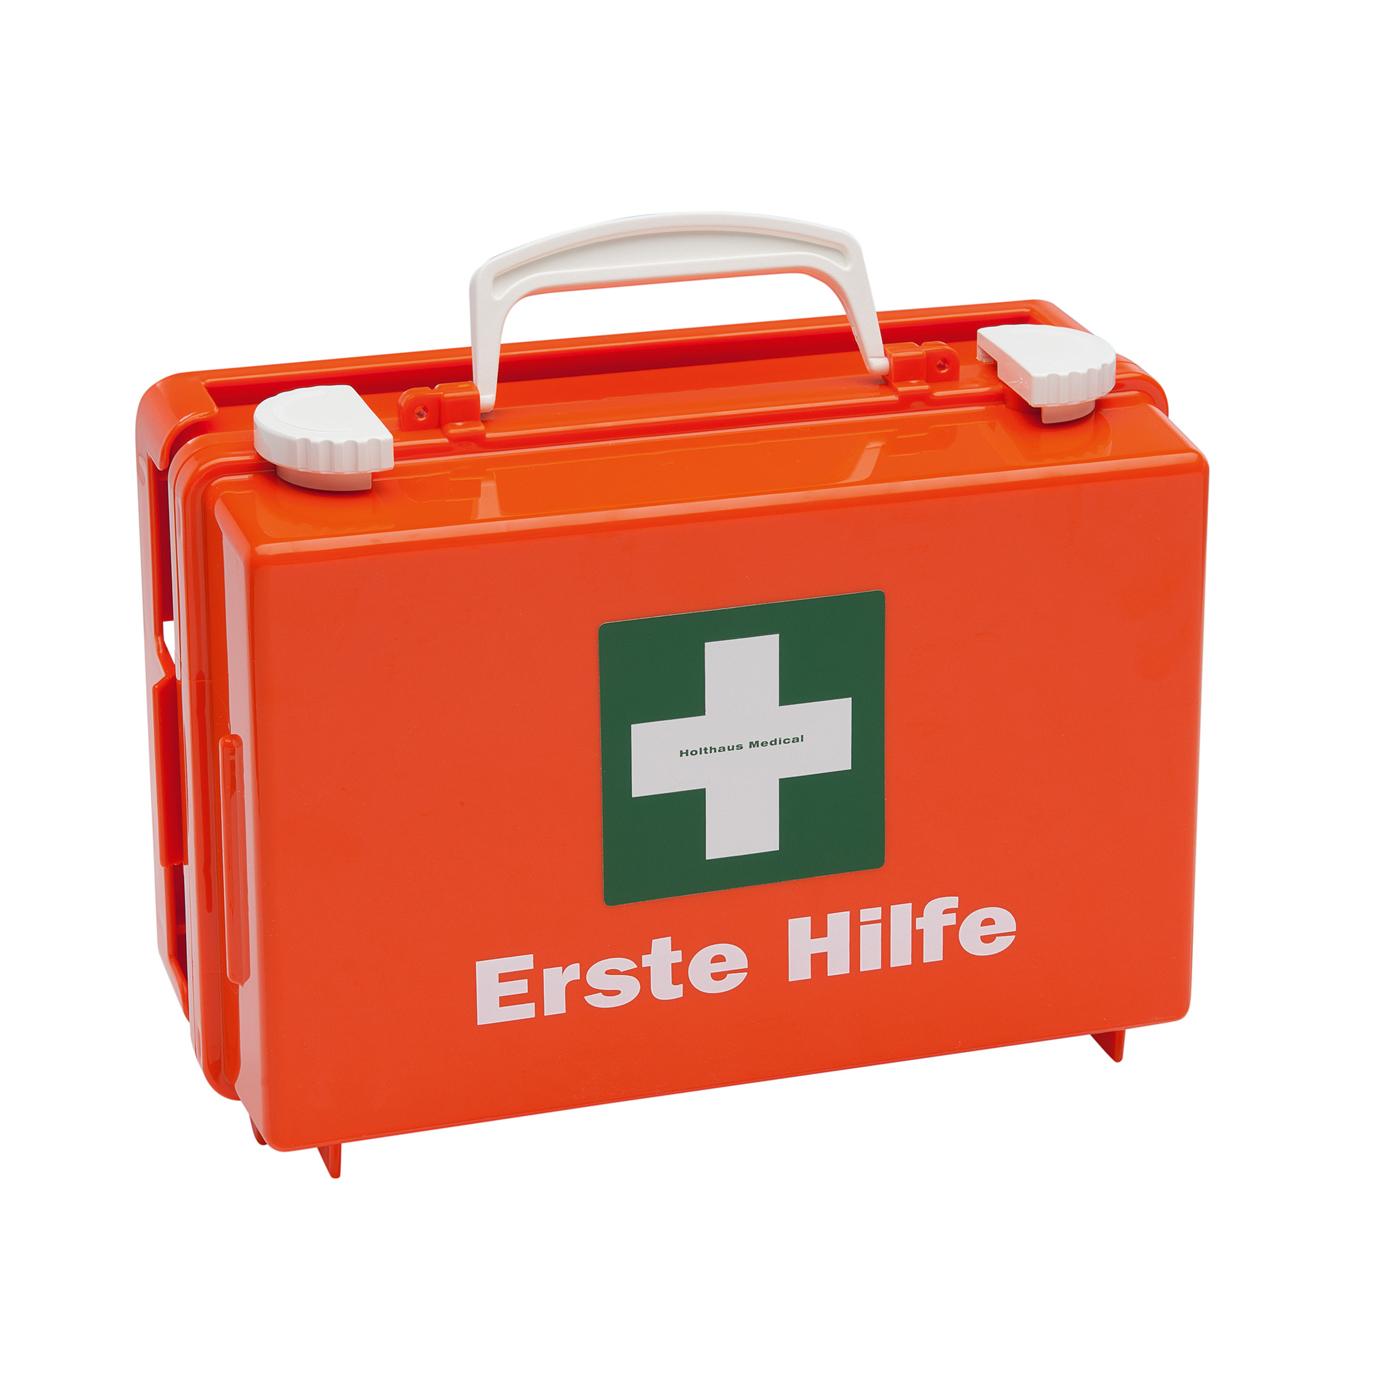 Holthaus Medical Quick Erste-Hilfe-Koffer - 1 Stück